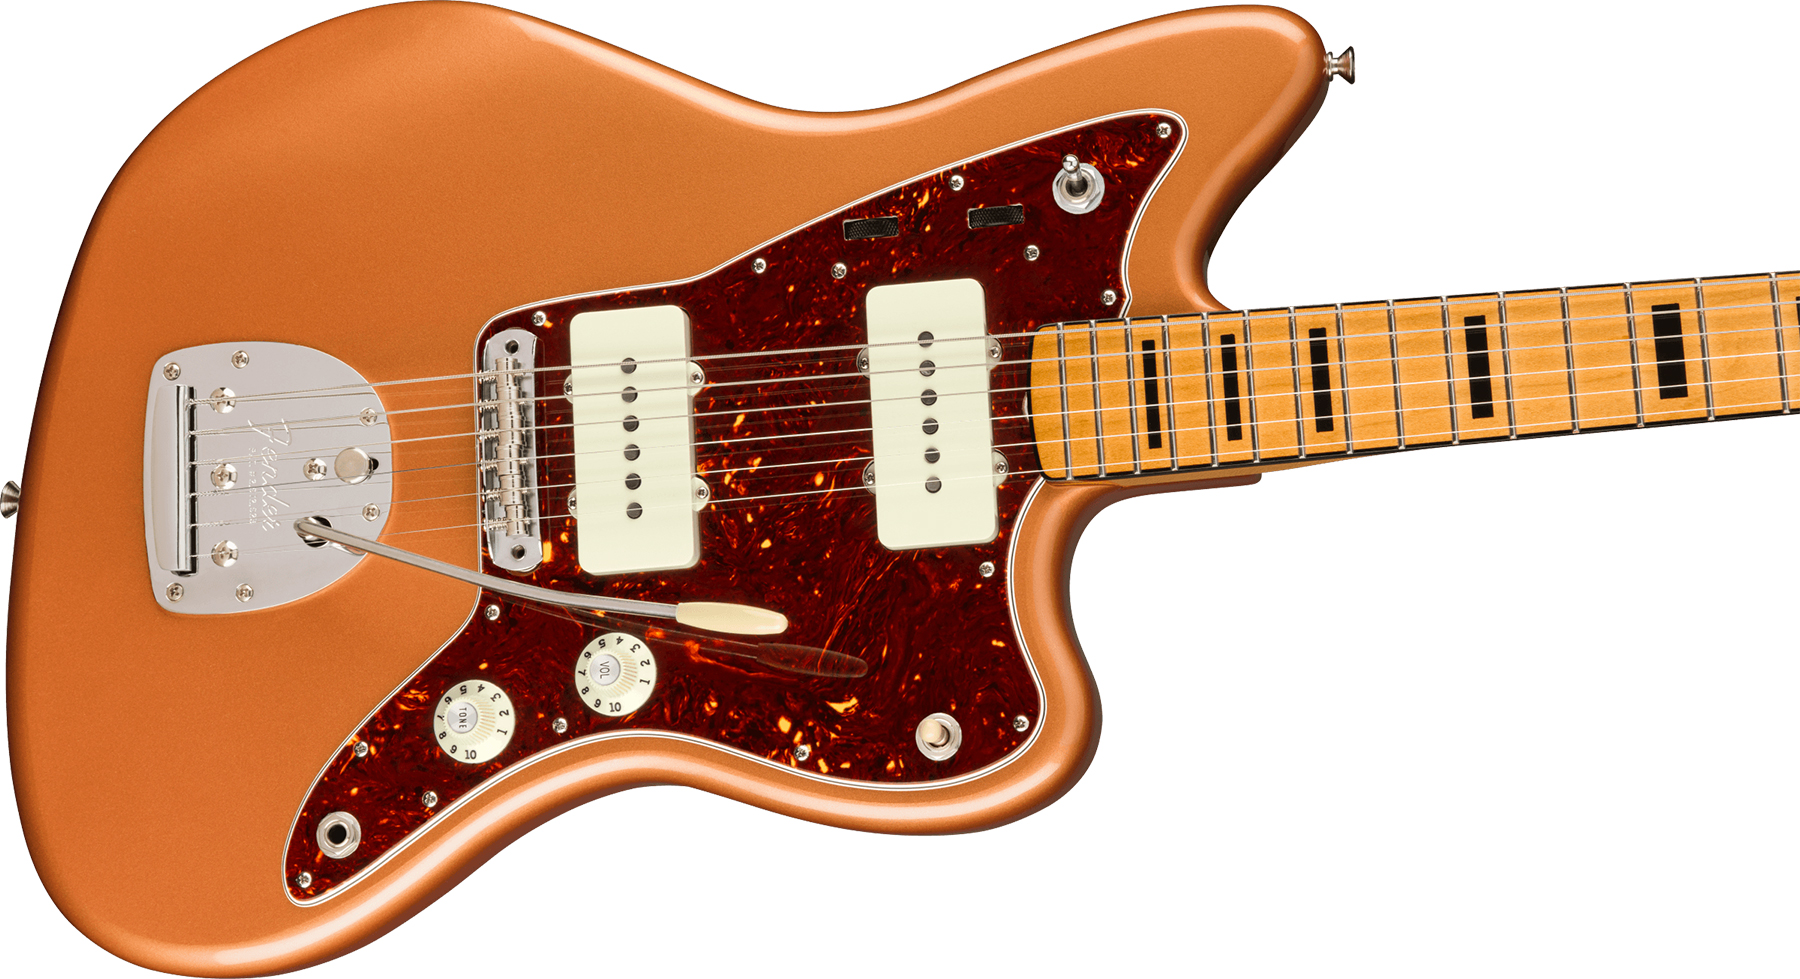 Fender Troy Van Leeuwen Jazzmaster Signature Mex Mn - Copper Age - Retro rock electric guitar - Variation 2